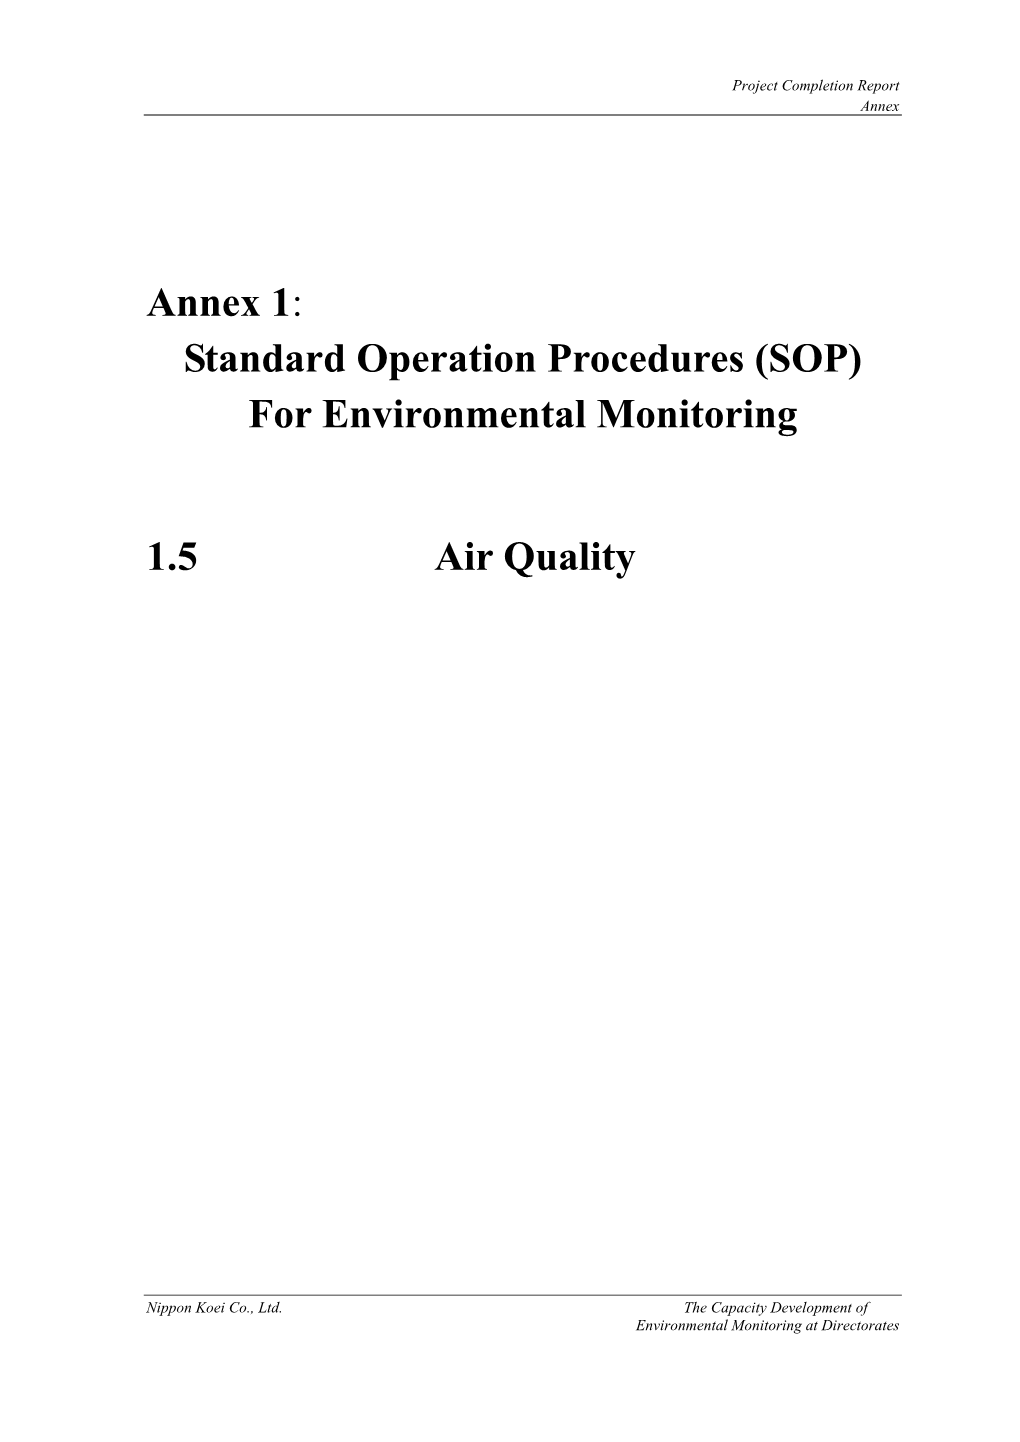 Annex 1: Standard Operation Procedures (SOP) for Environmental Monitoring